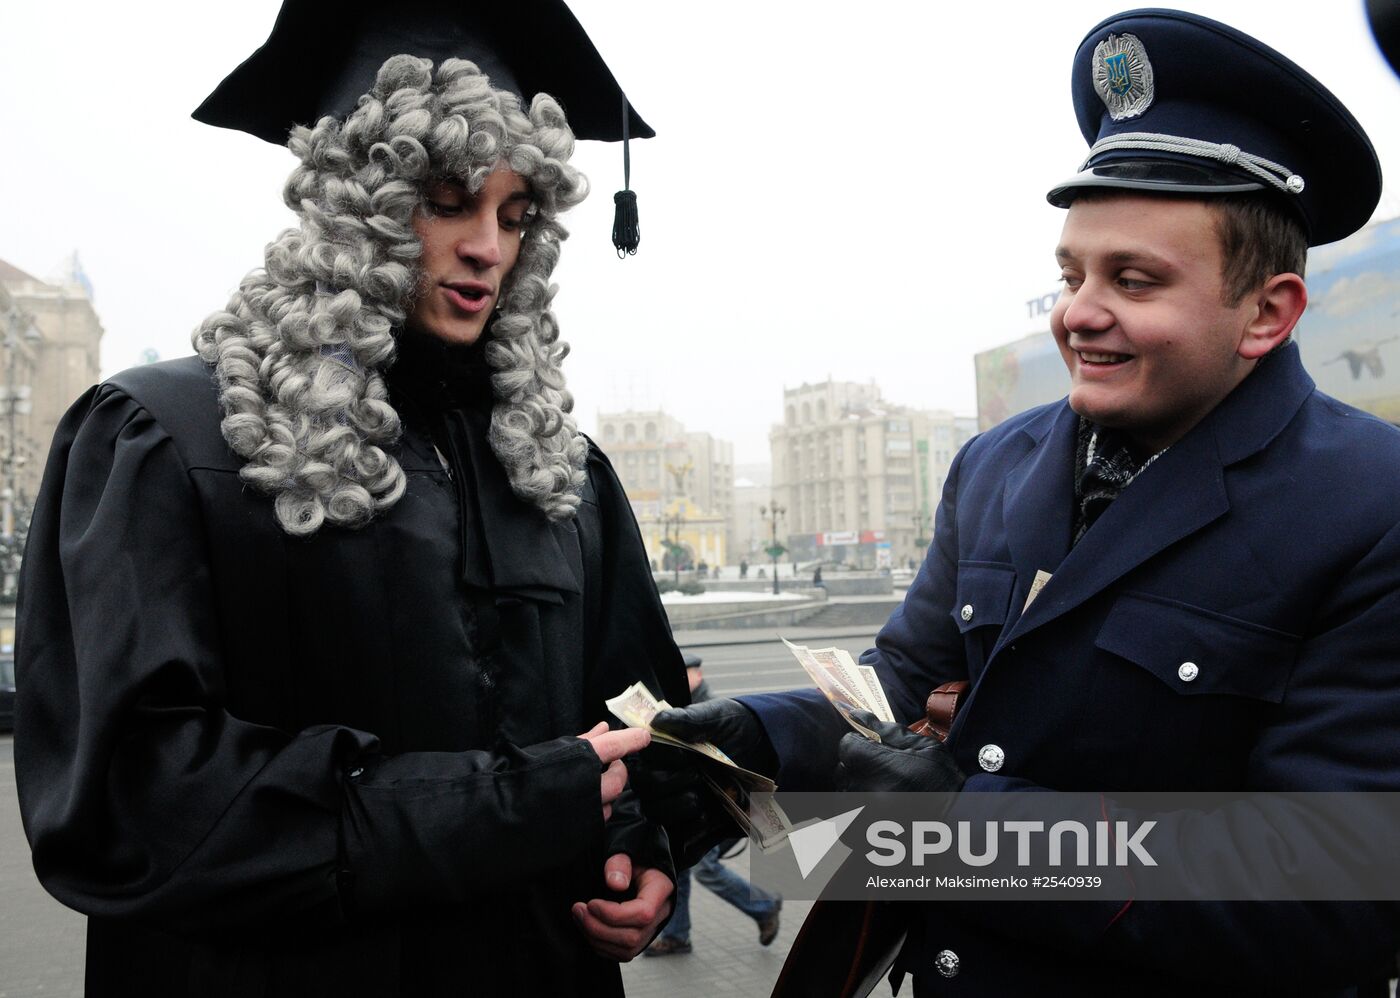 Street event "Unbribing hryvnia for a bribe-taker" in Kiev